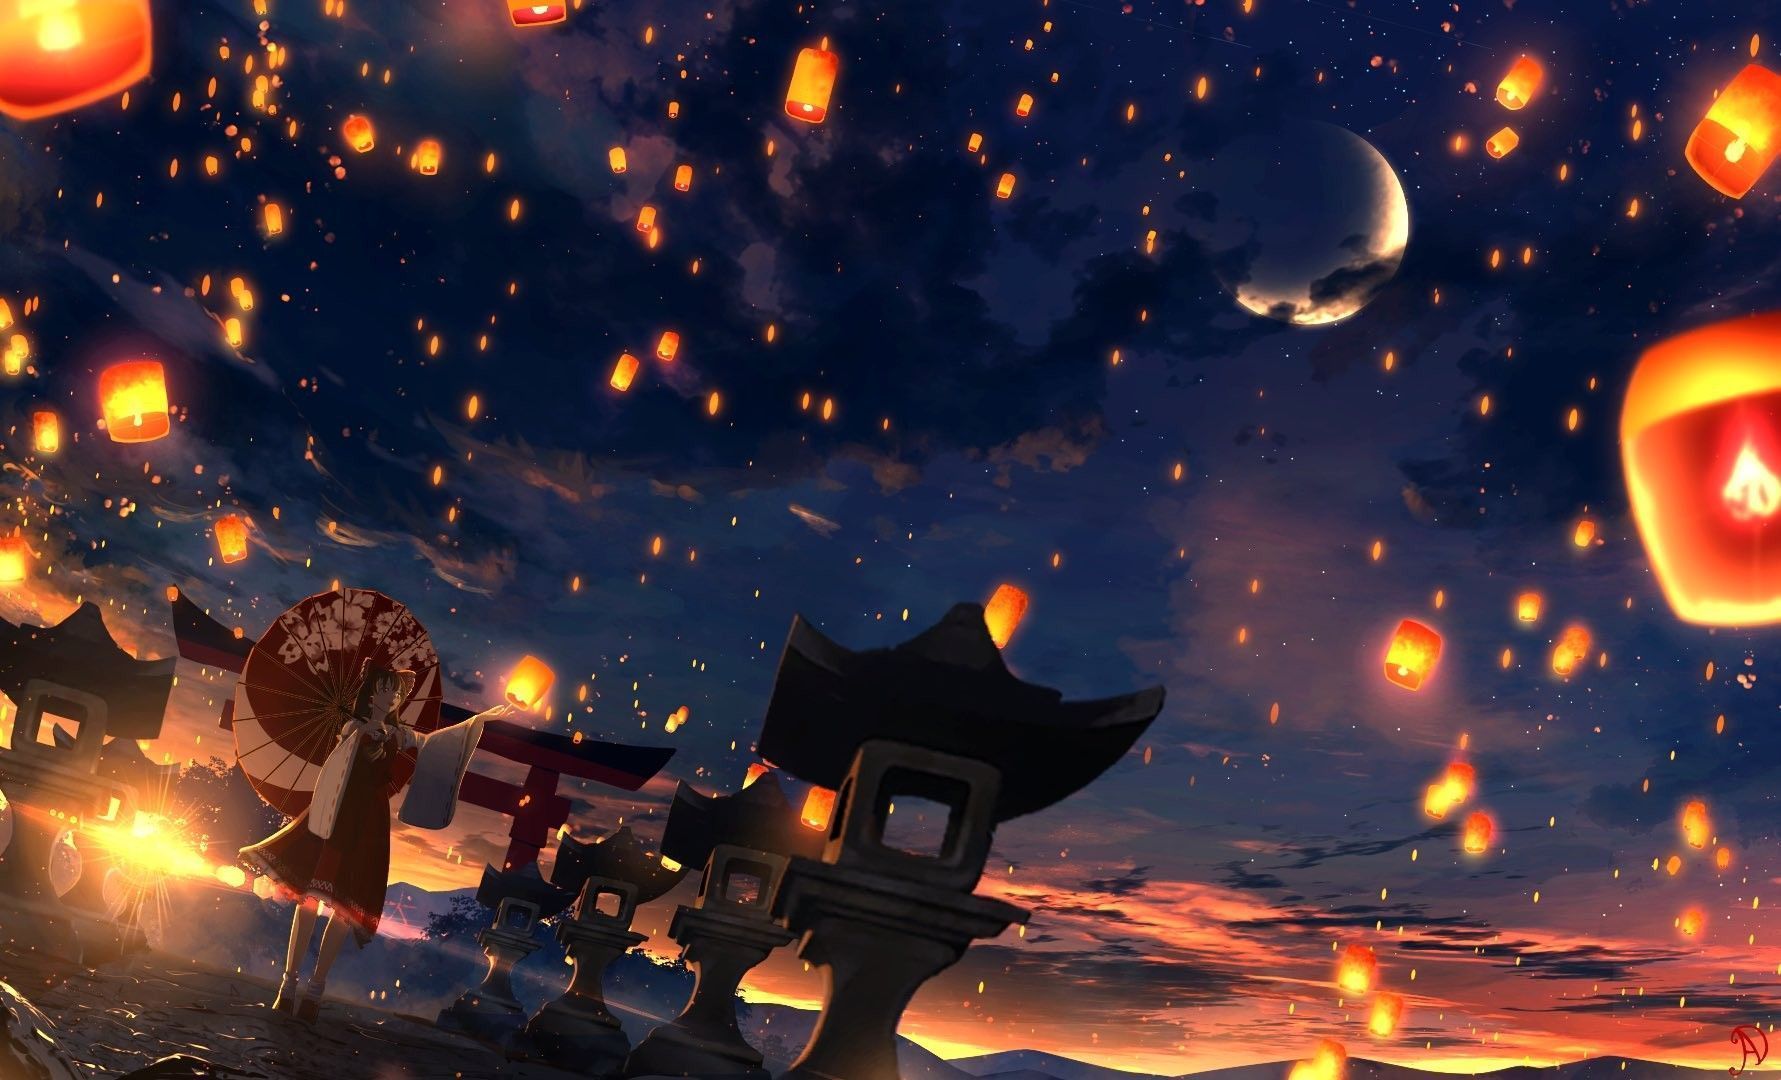 Anime Lantern Wallpapers - Top Free Anime Lantern Backgrounds ...